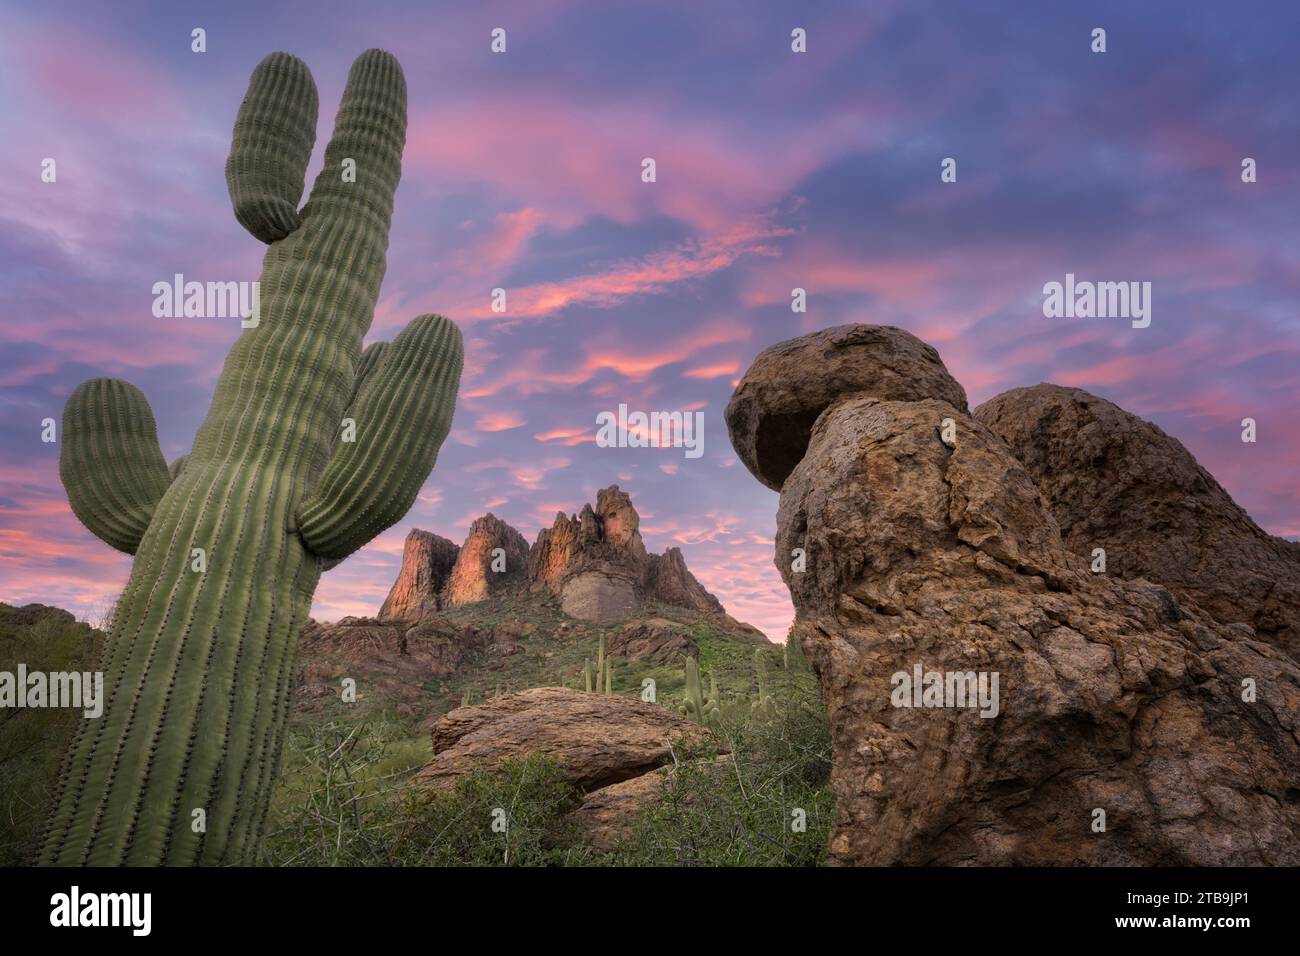 Tramonto con cactus Cholla e cactus Suguaro. Superstion Mountains, Arizona Foto Stock